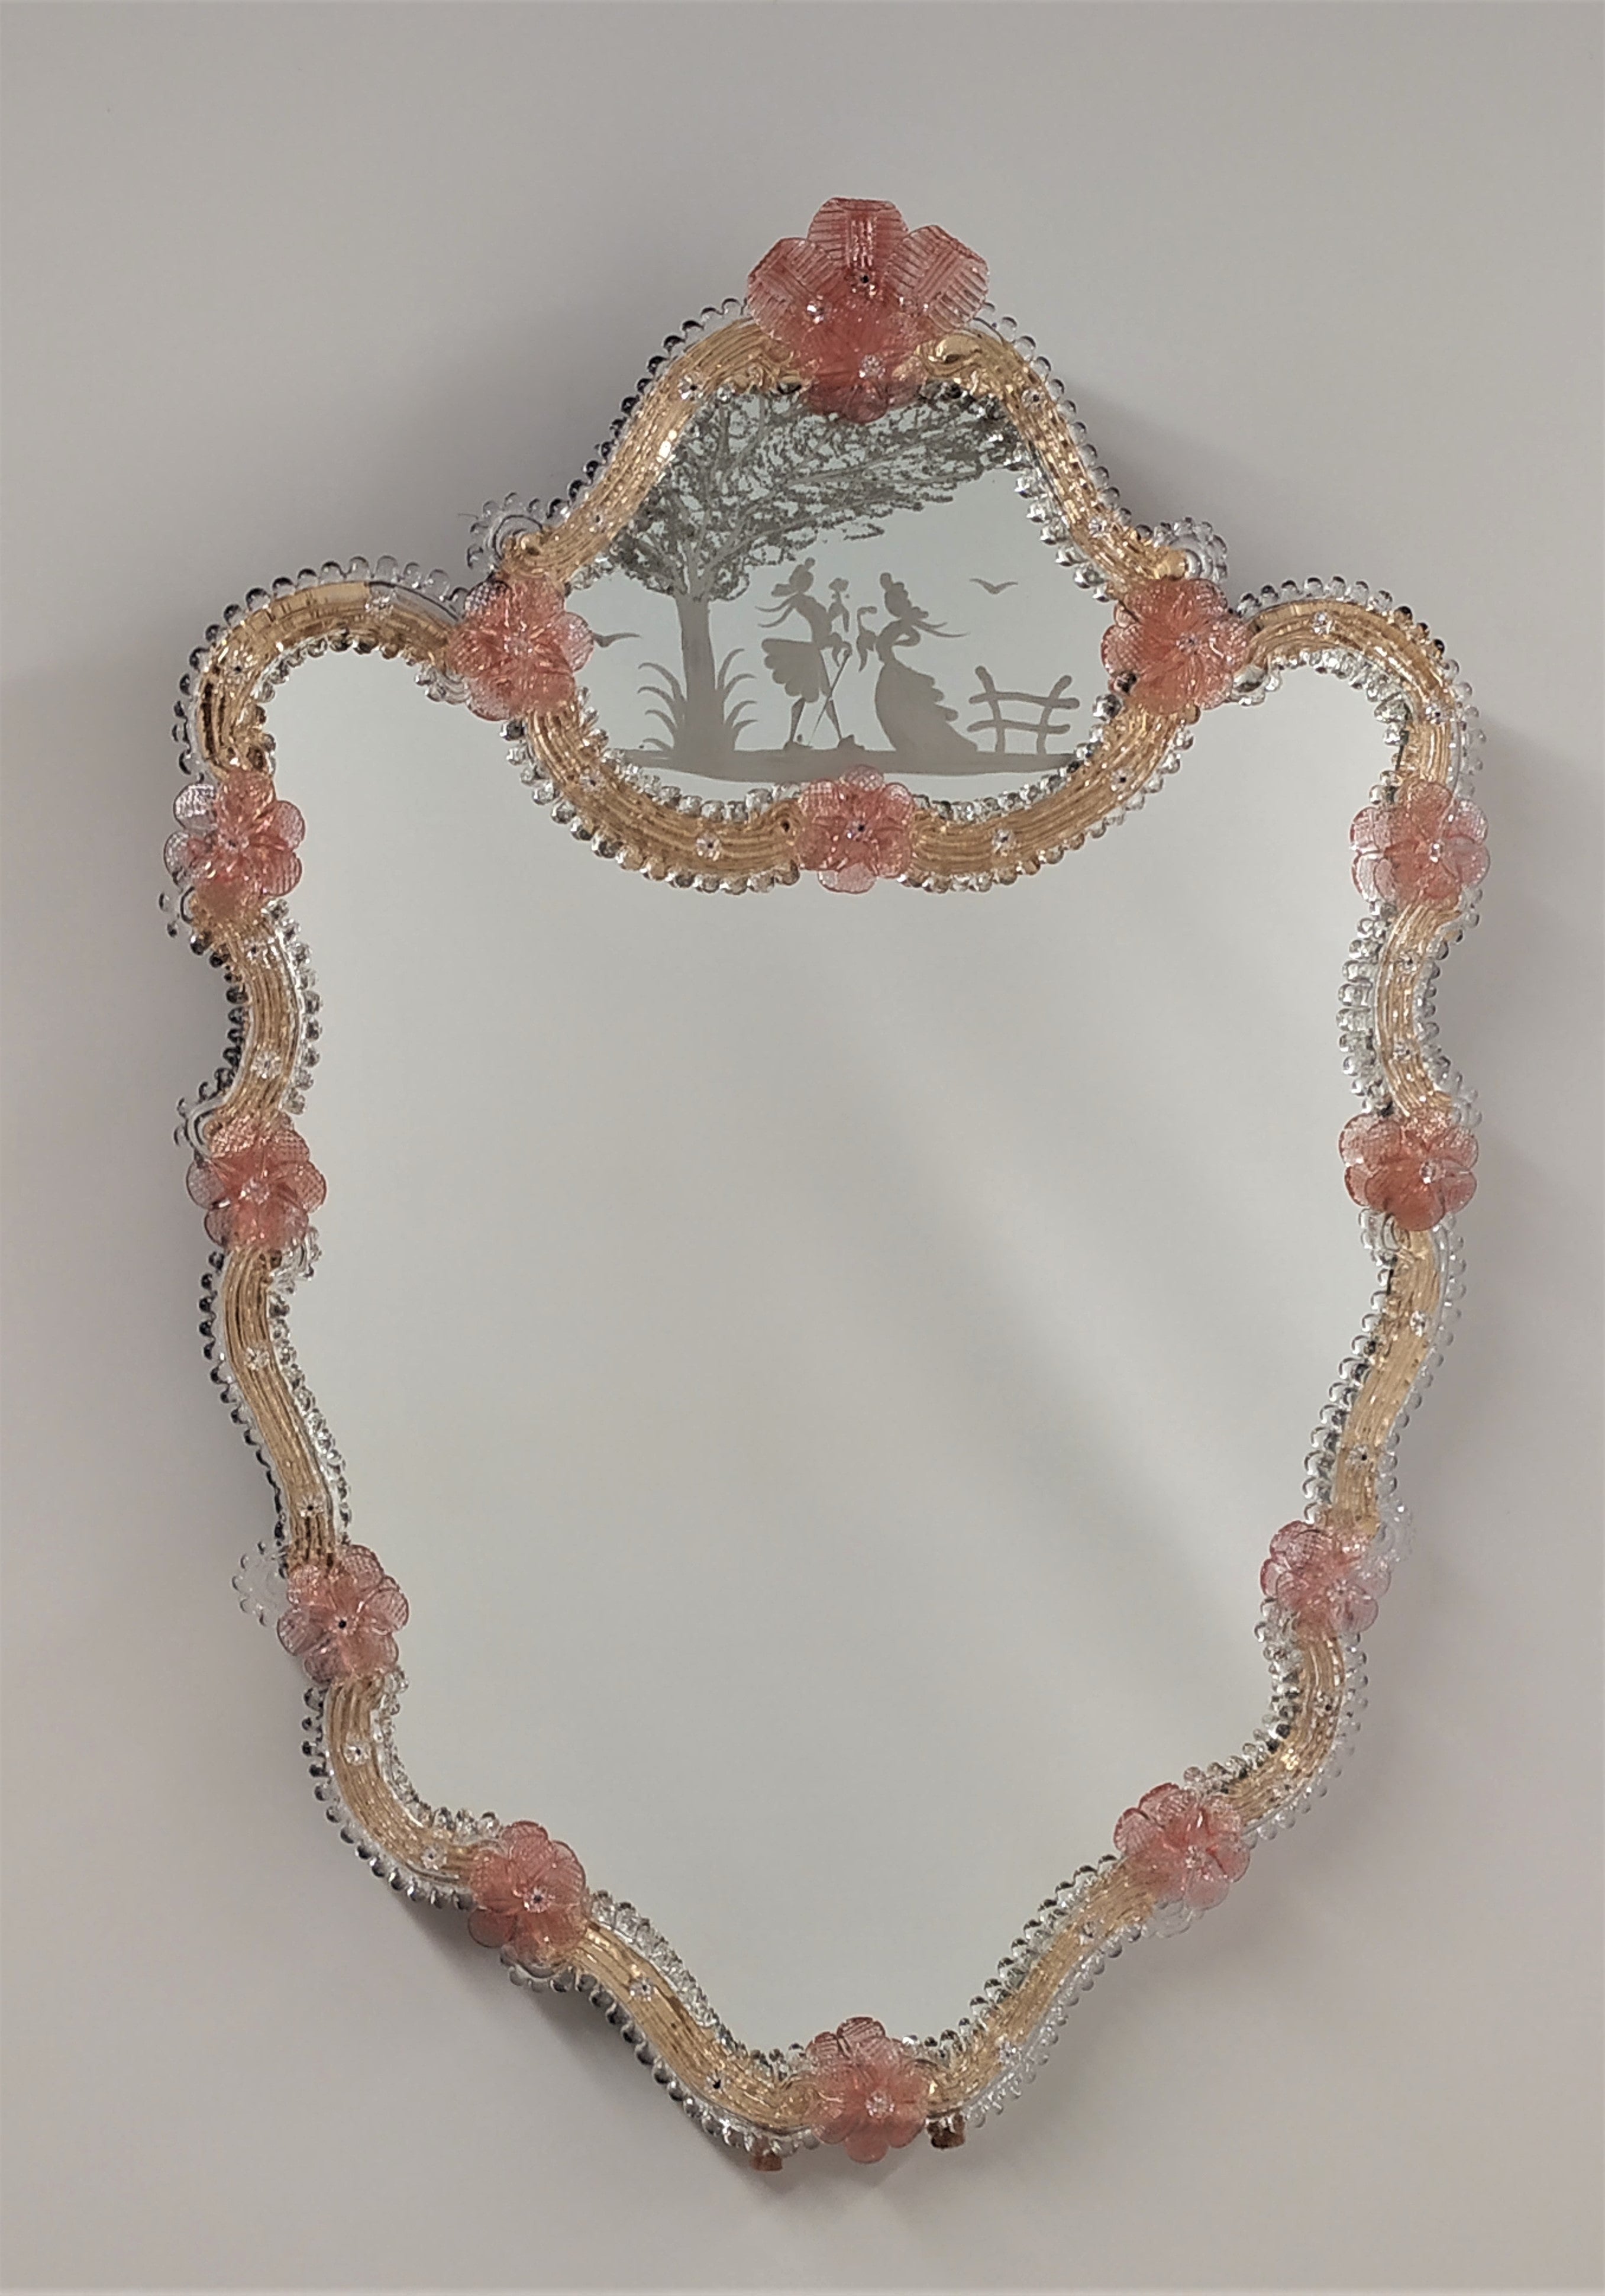 Miroir vénitien « Ca' Da Mosto » de Fratelli Tosi Murano, fabriqué en Italie